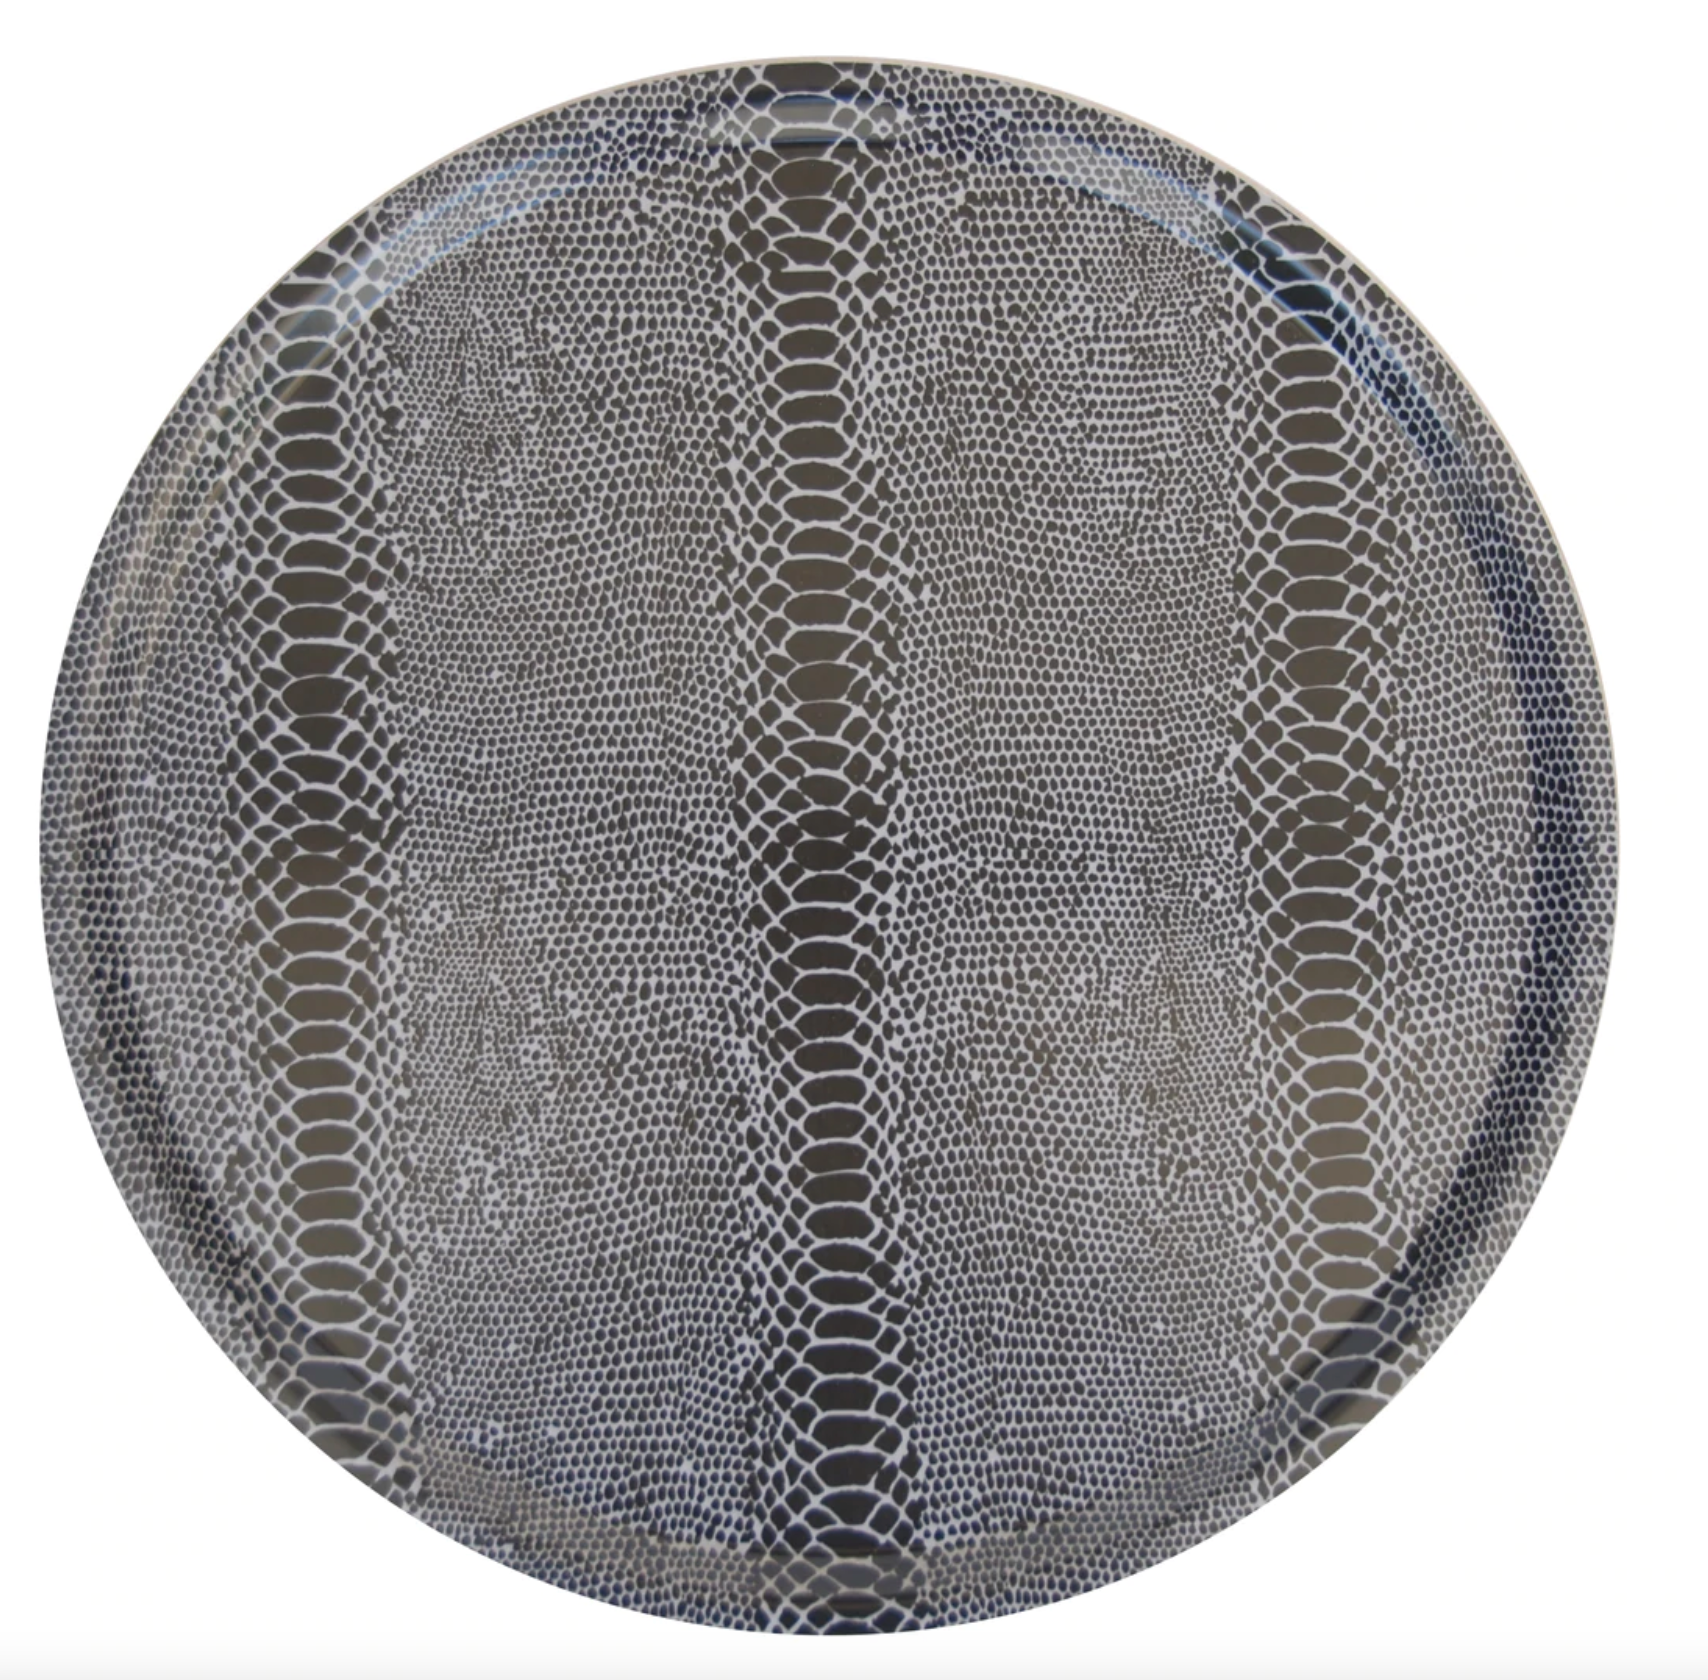 Large Round Serving Tray- Black Snakeskin